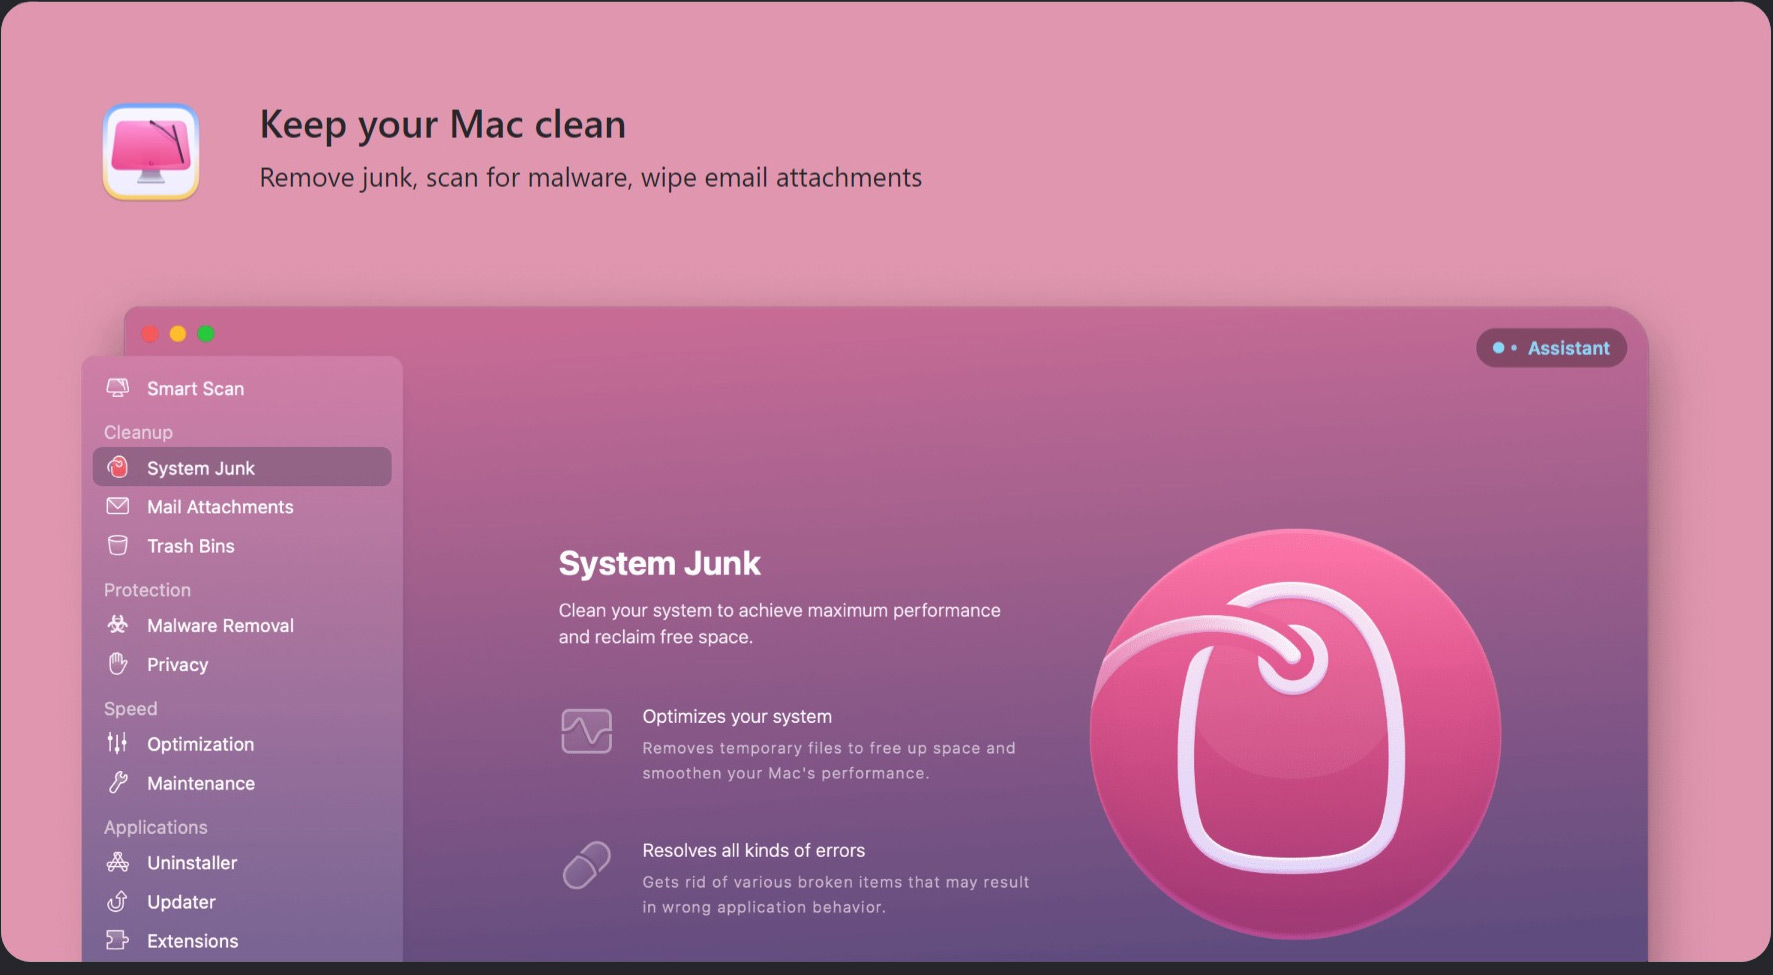 Keep your Mac clean